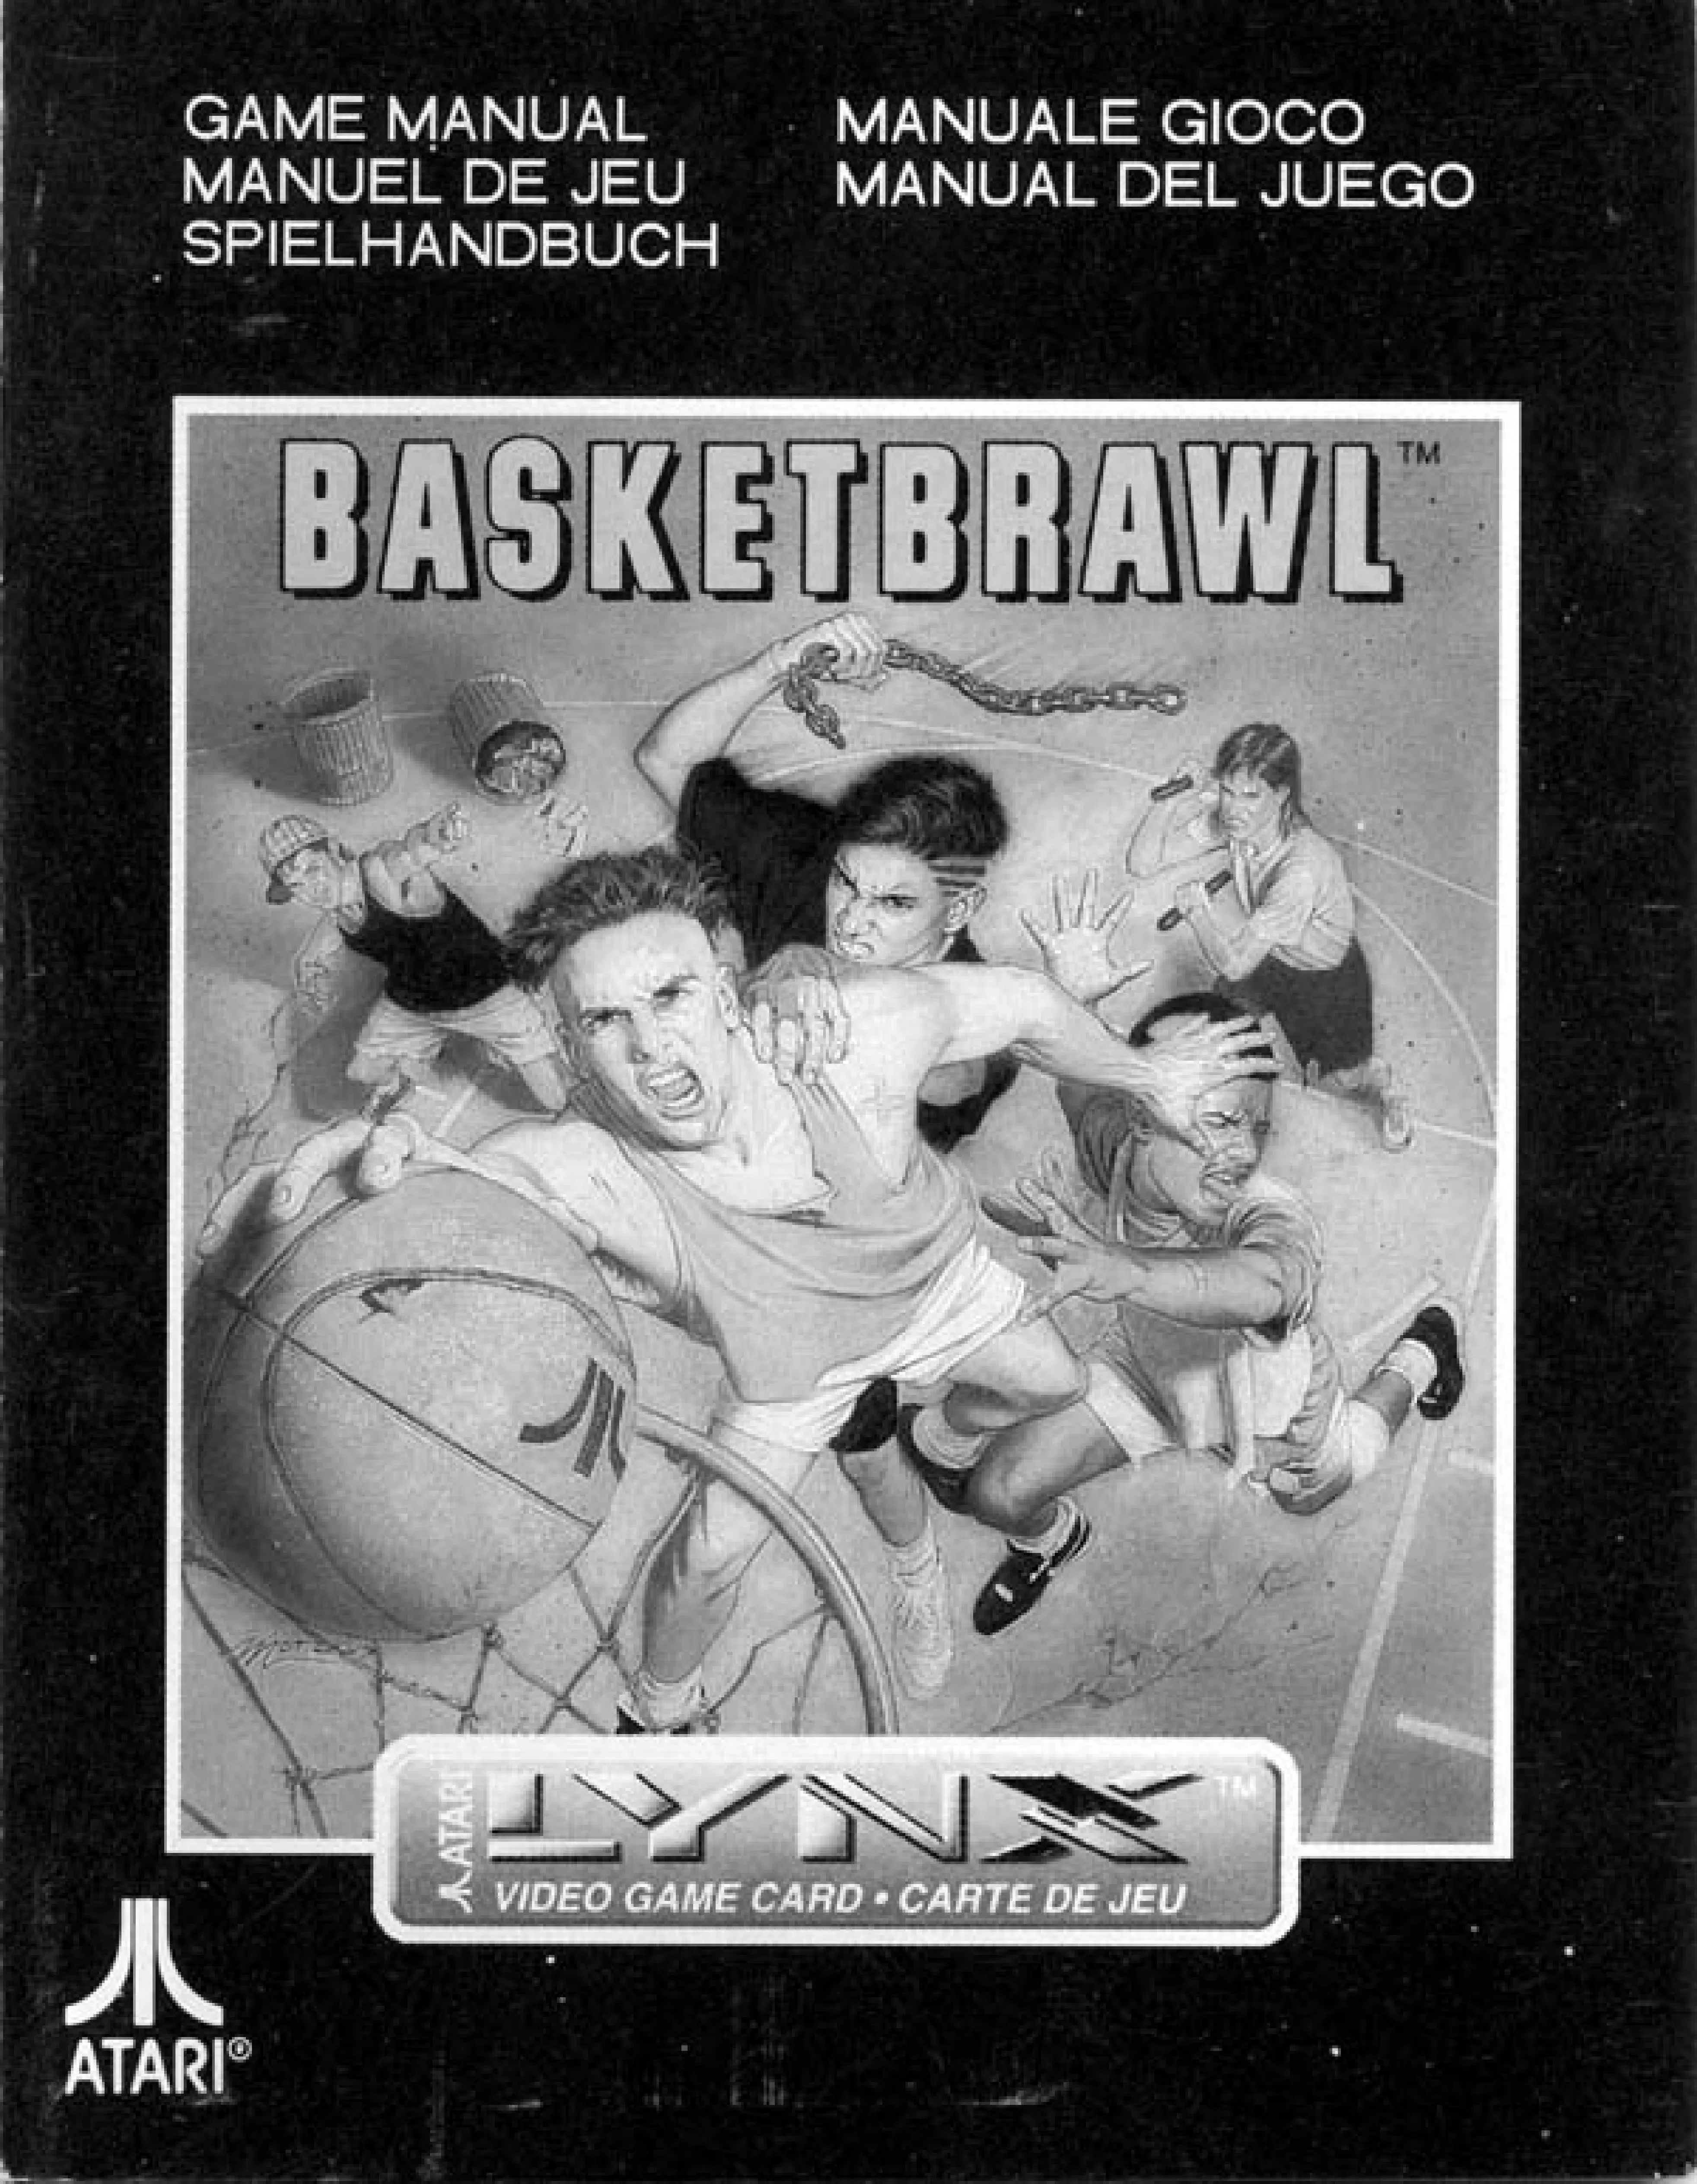 manual for Basketbrawl